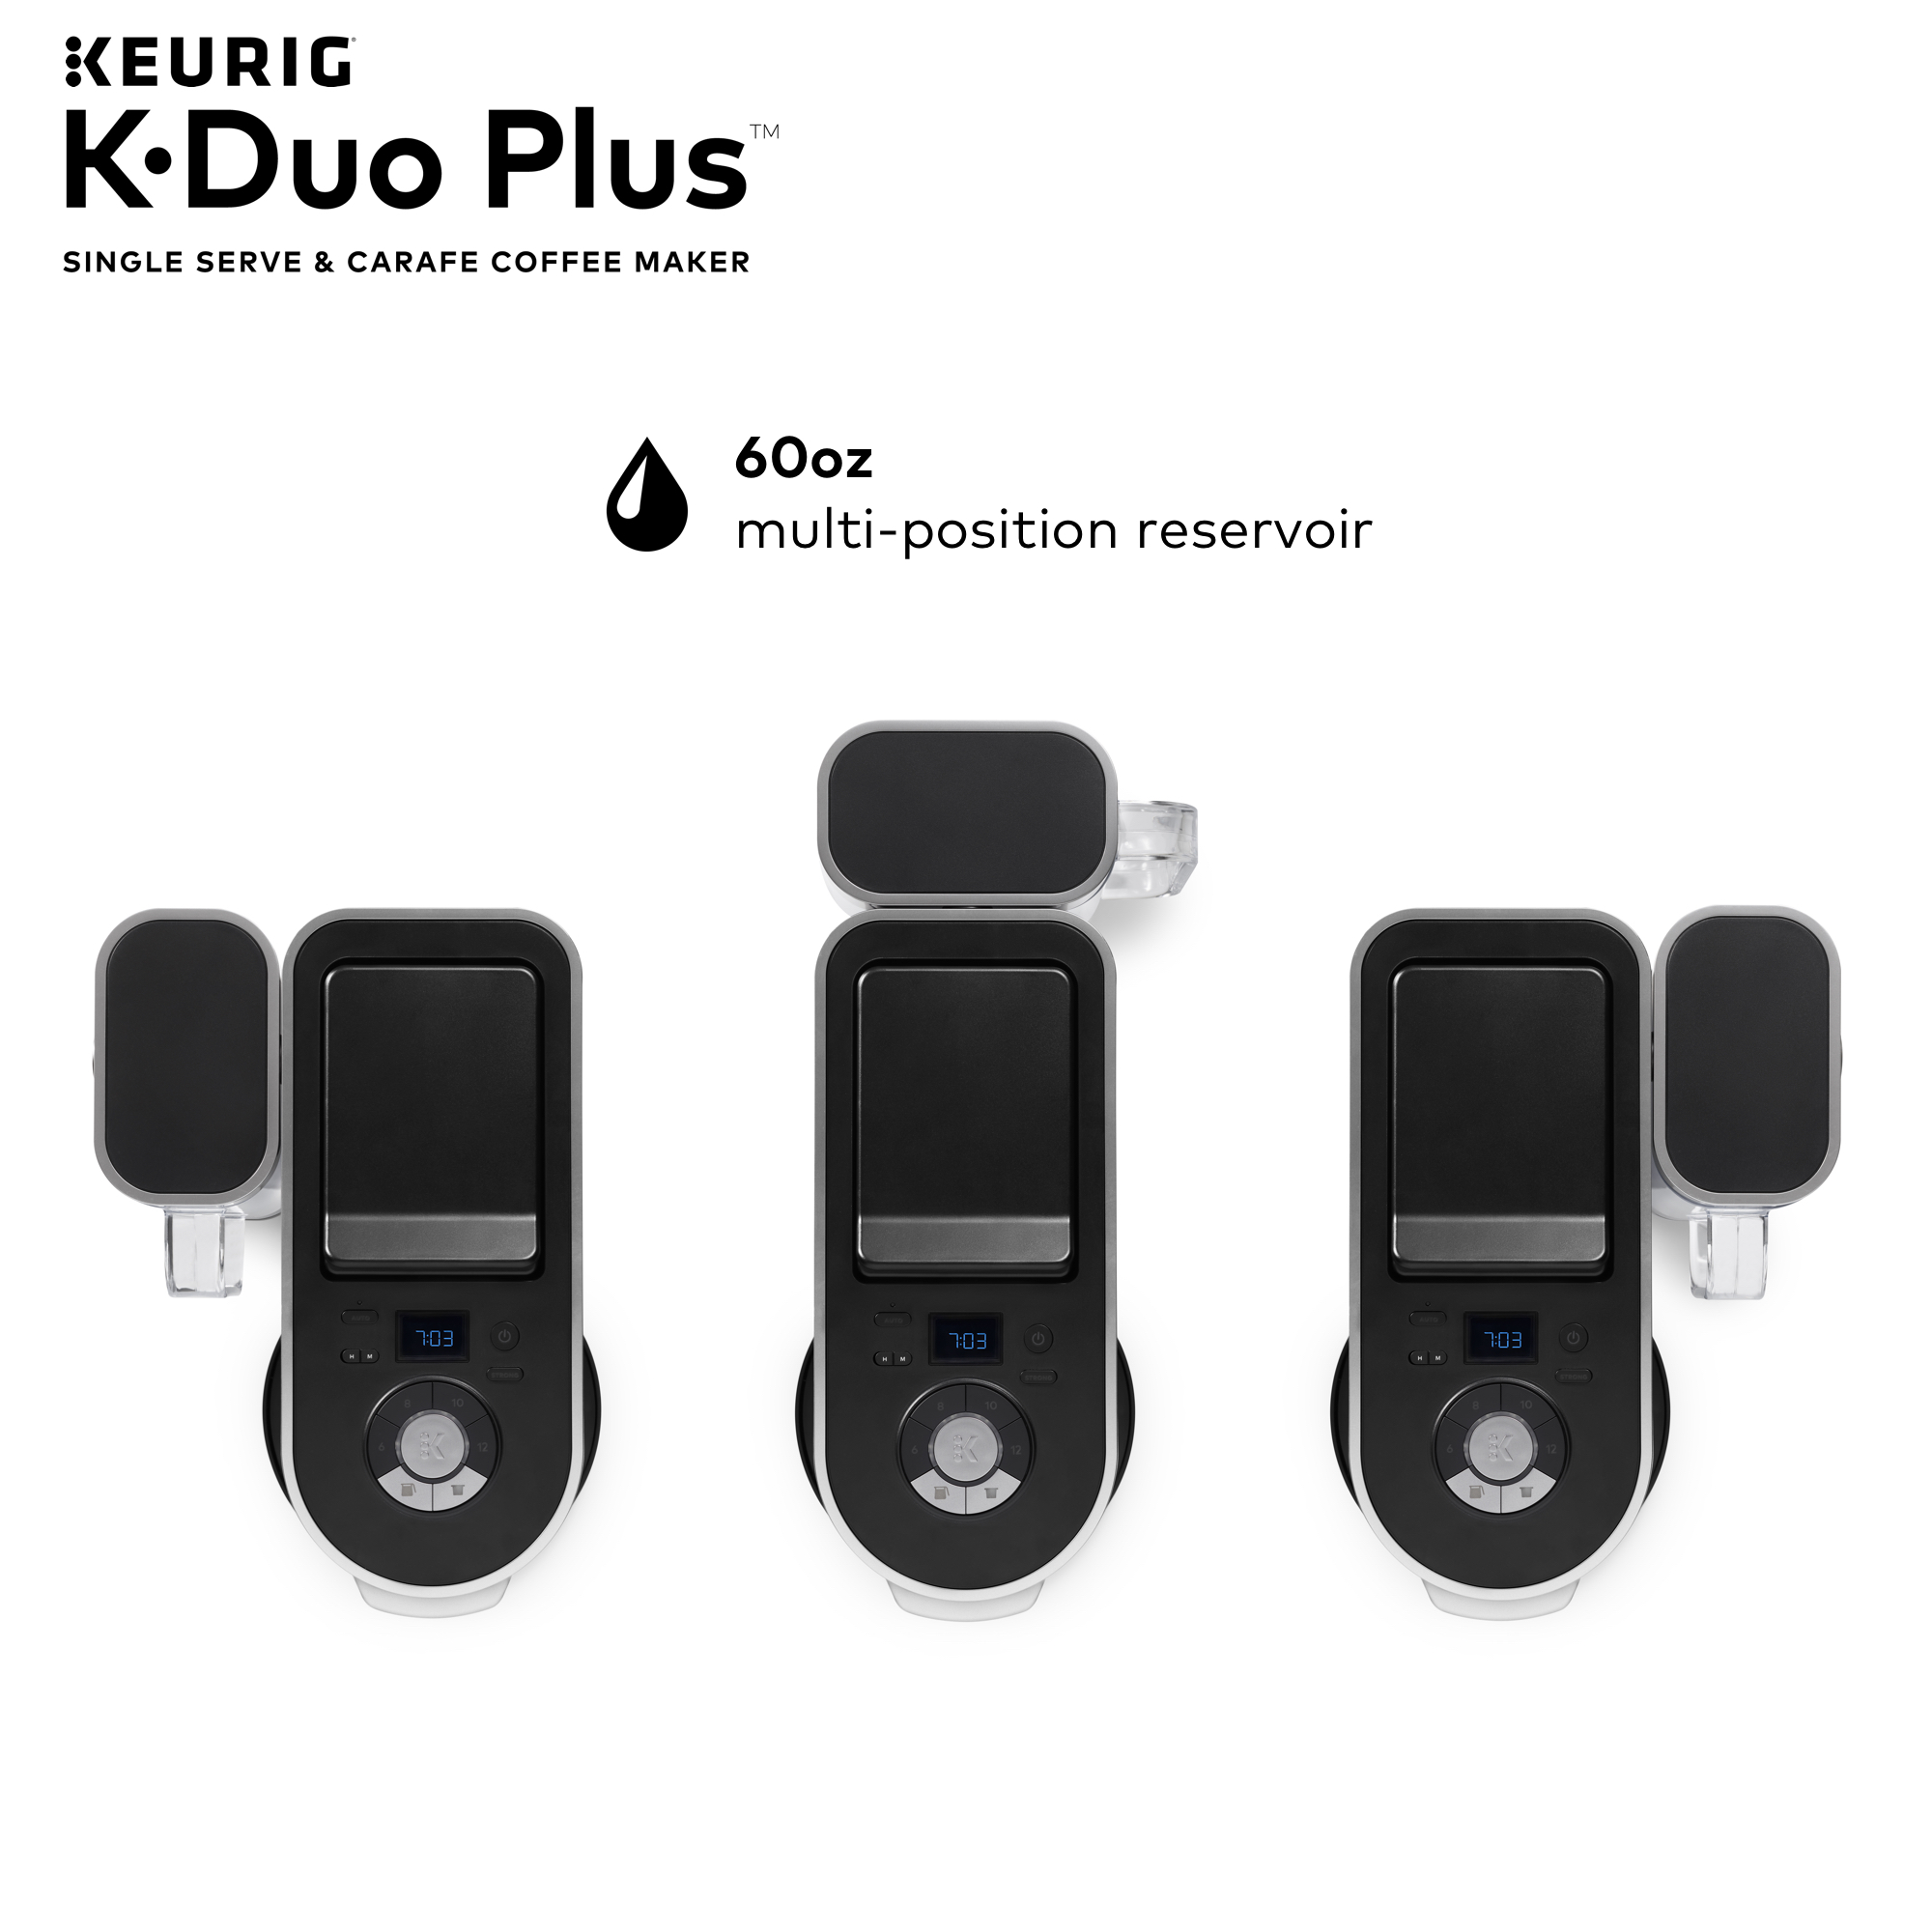 Keurig K-Duo Plus Single Serve & Carafe Coffee Maker - image 6 of 24